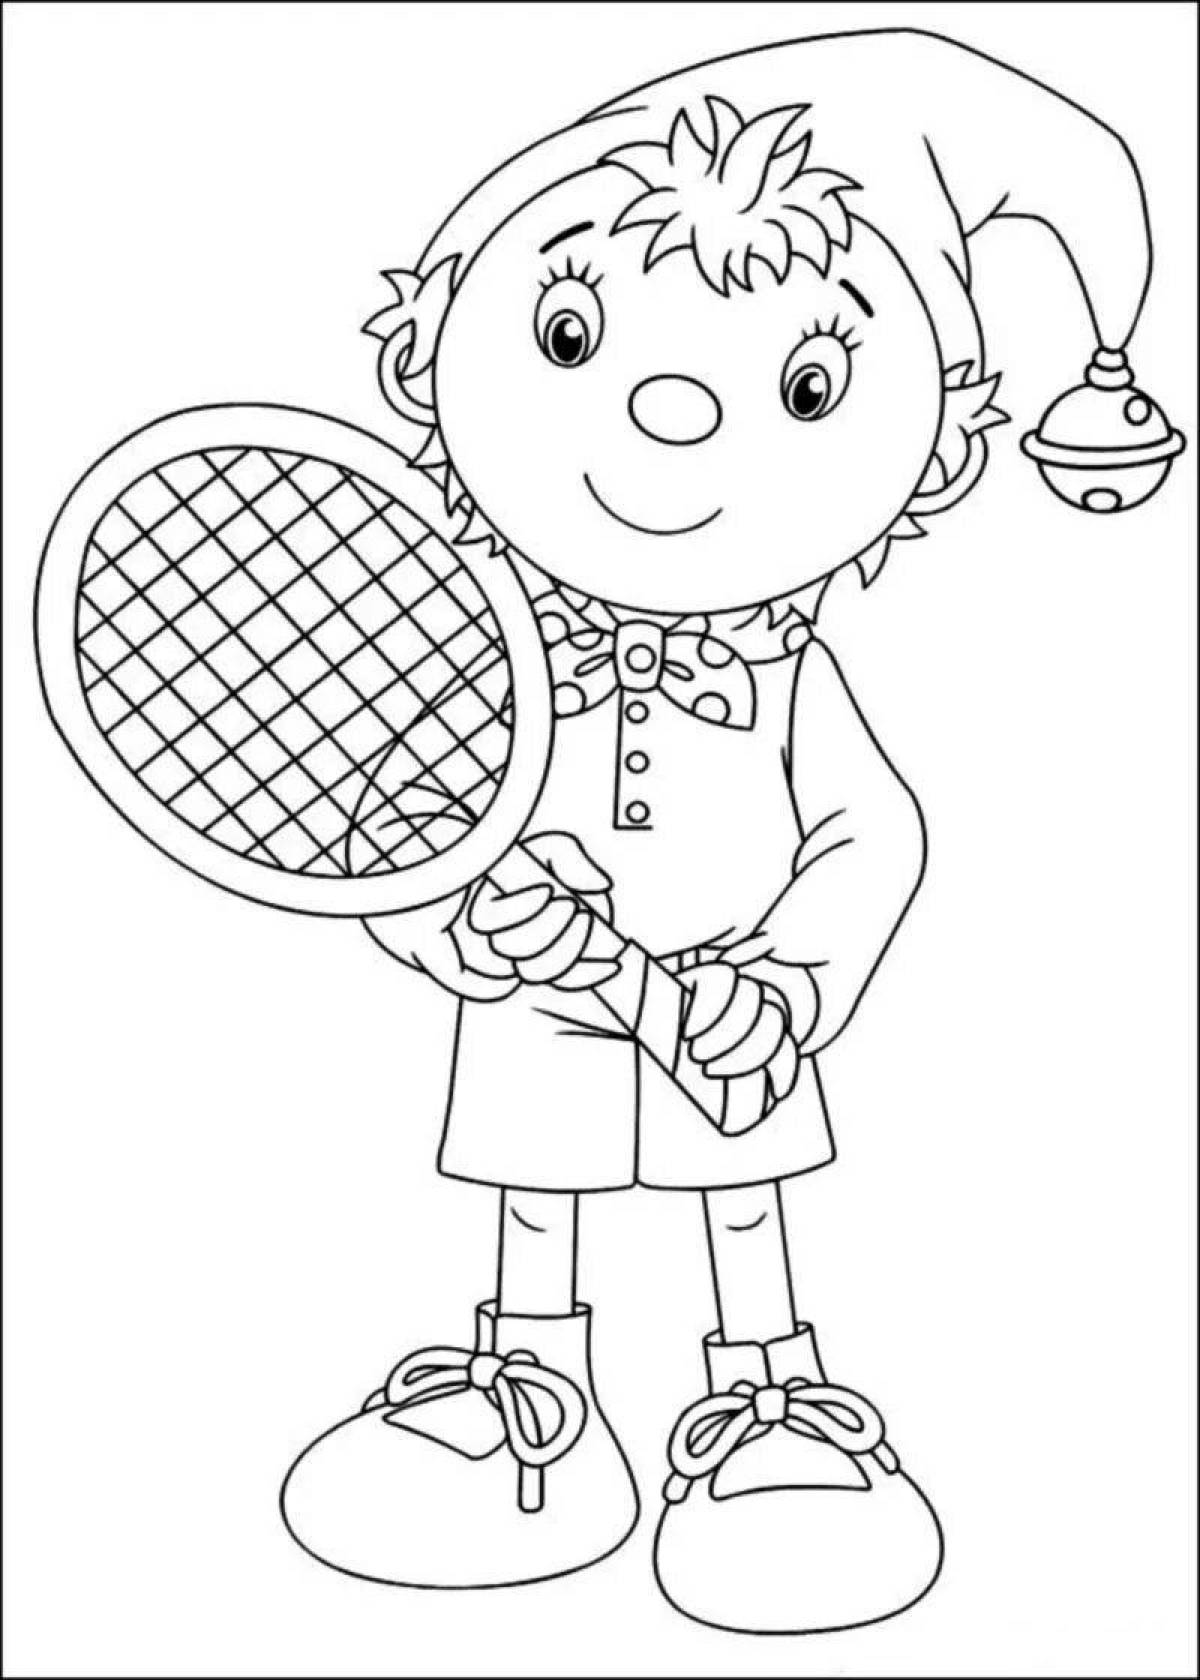 A fun tennis coloring book for kids